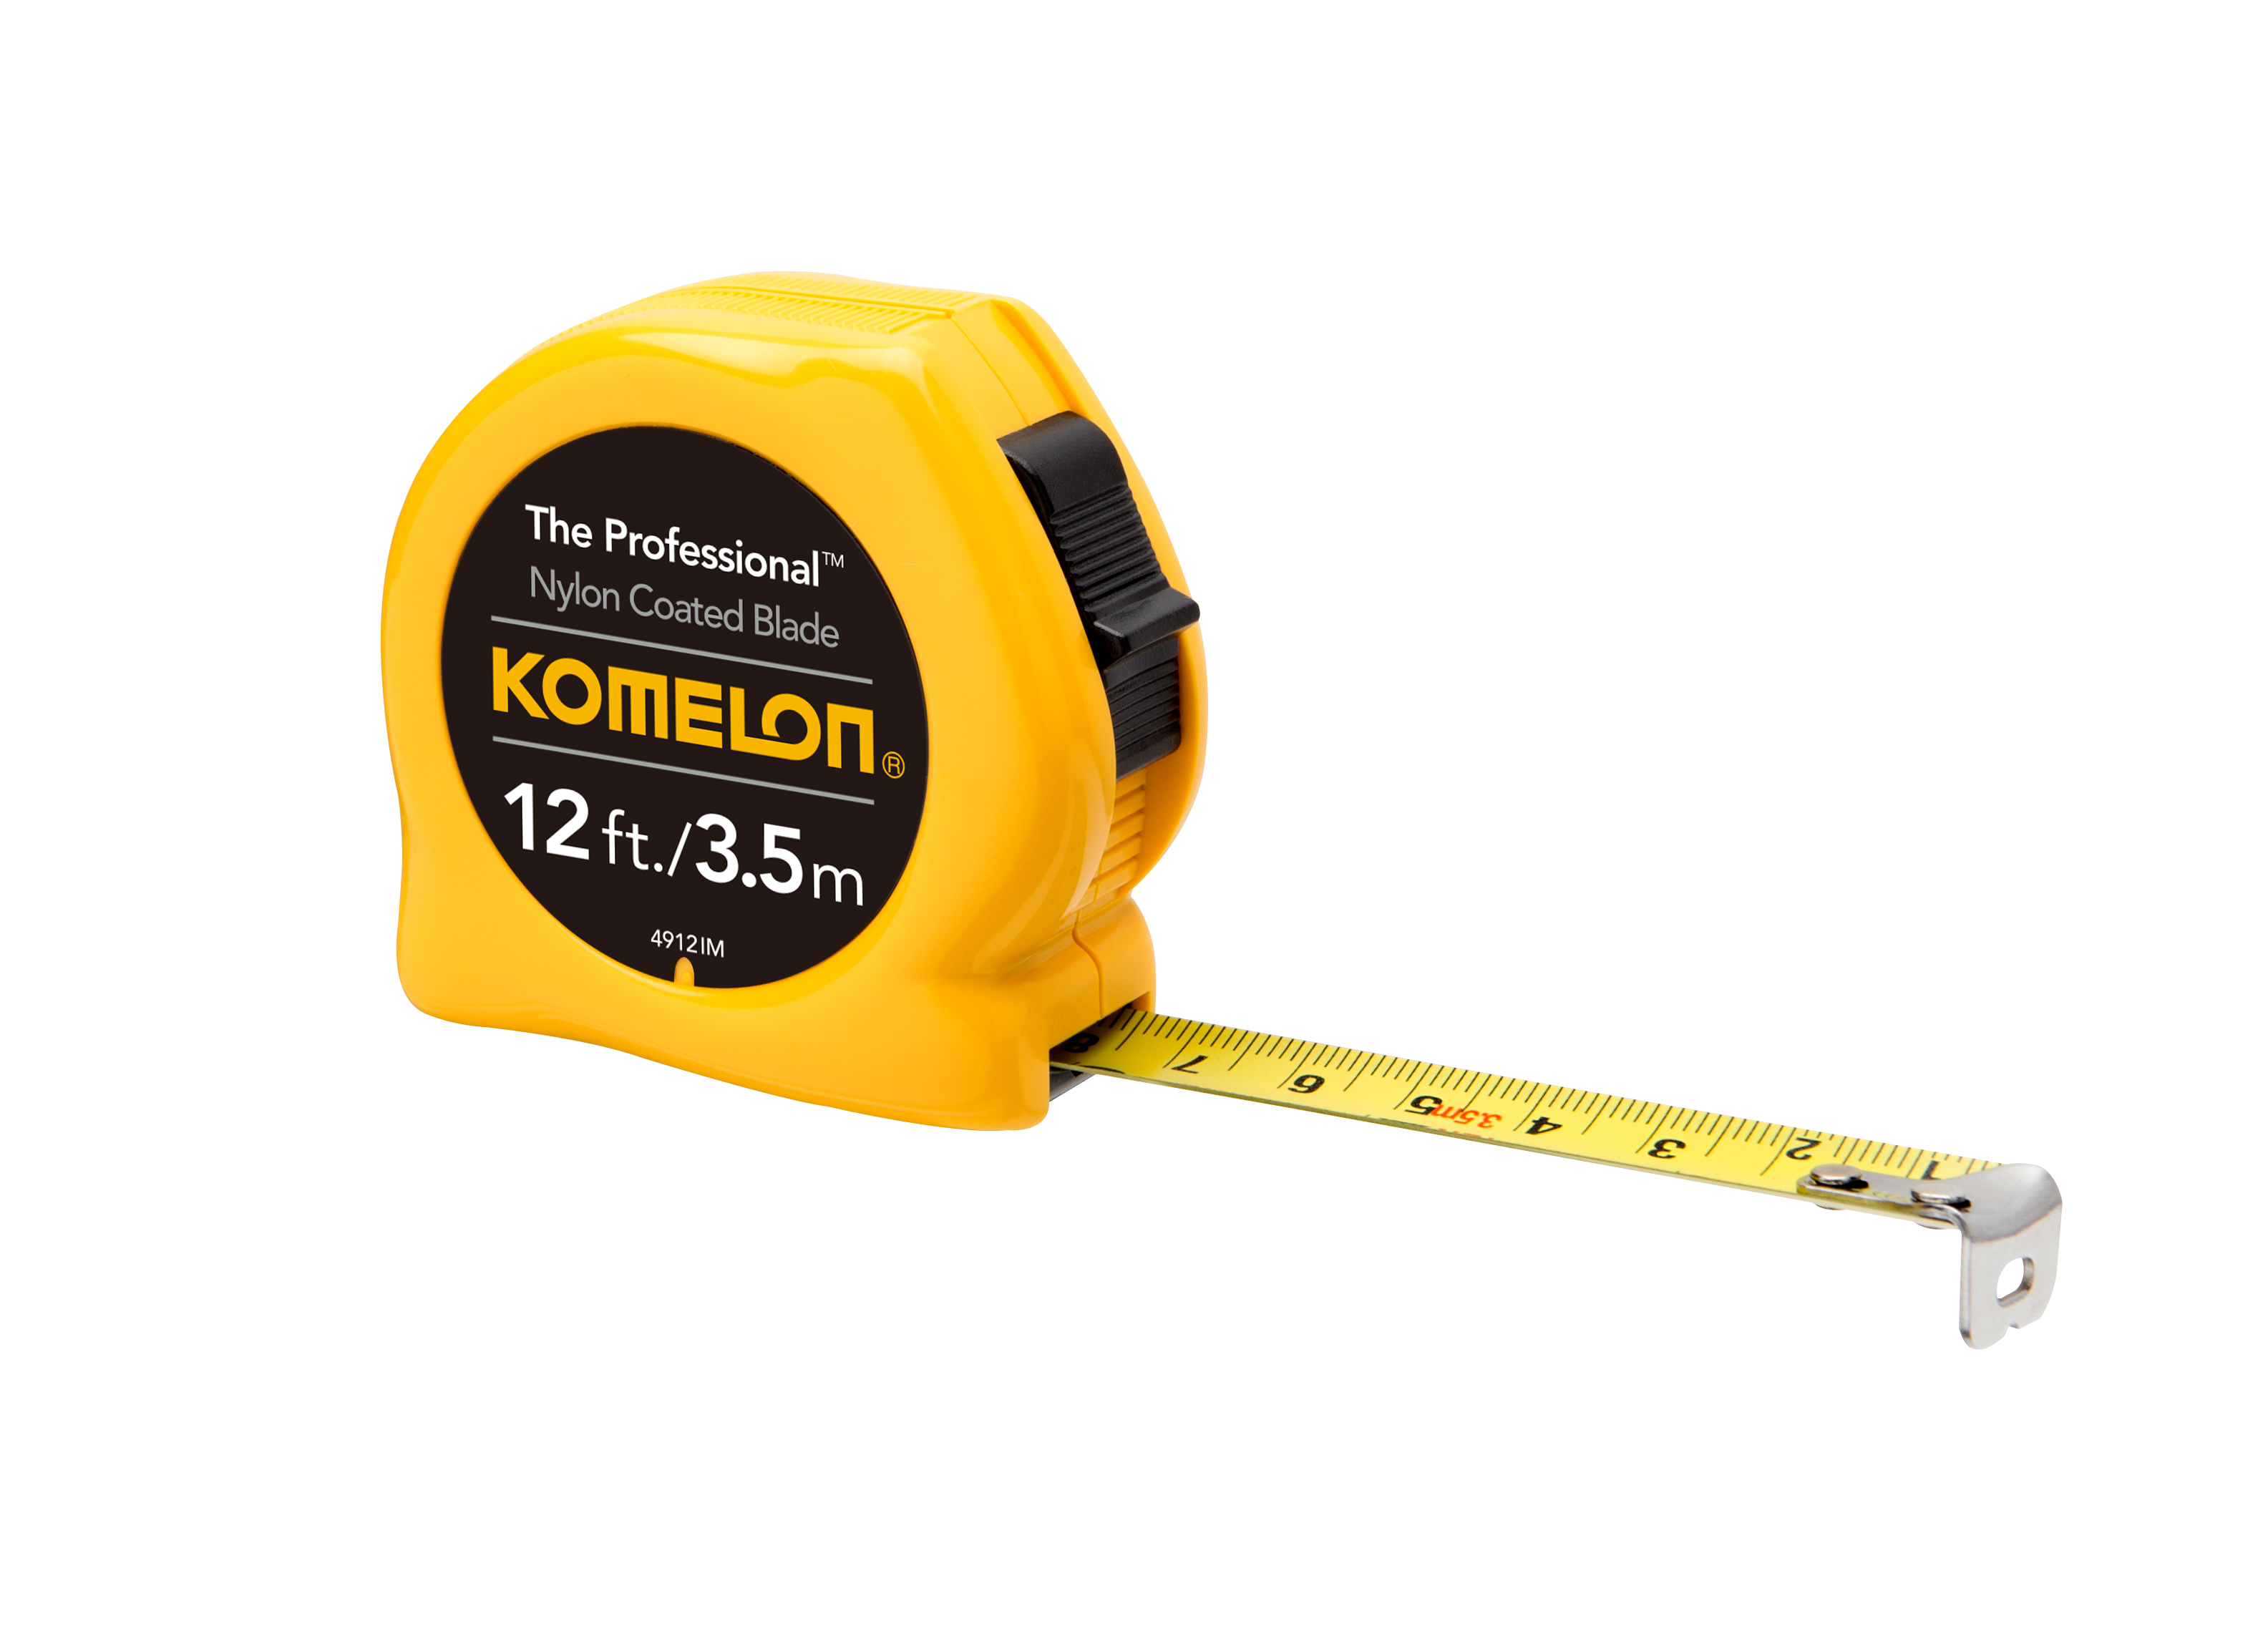 Komelon The Professional Metric Tape Measure - image 1 of 6